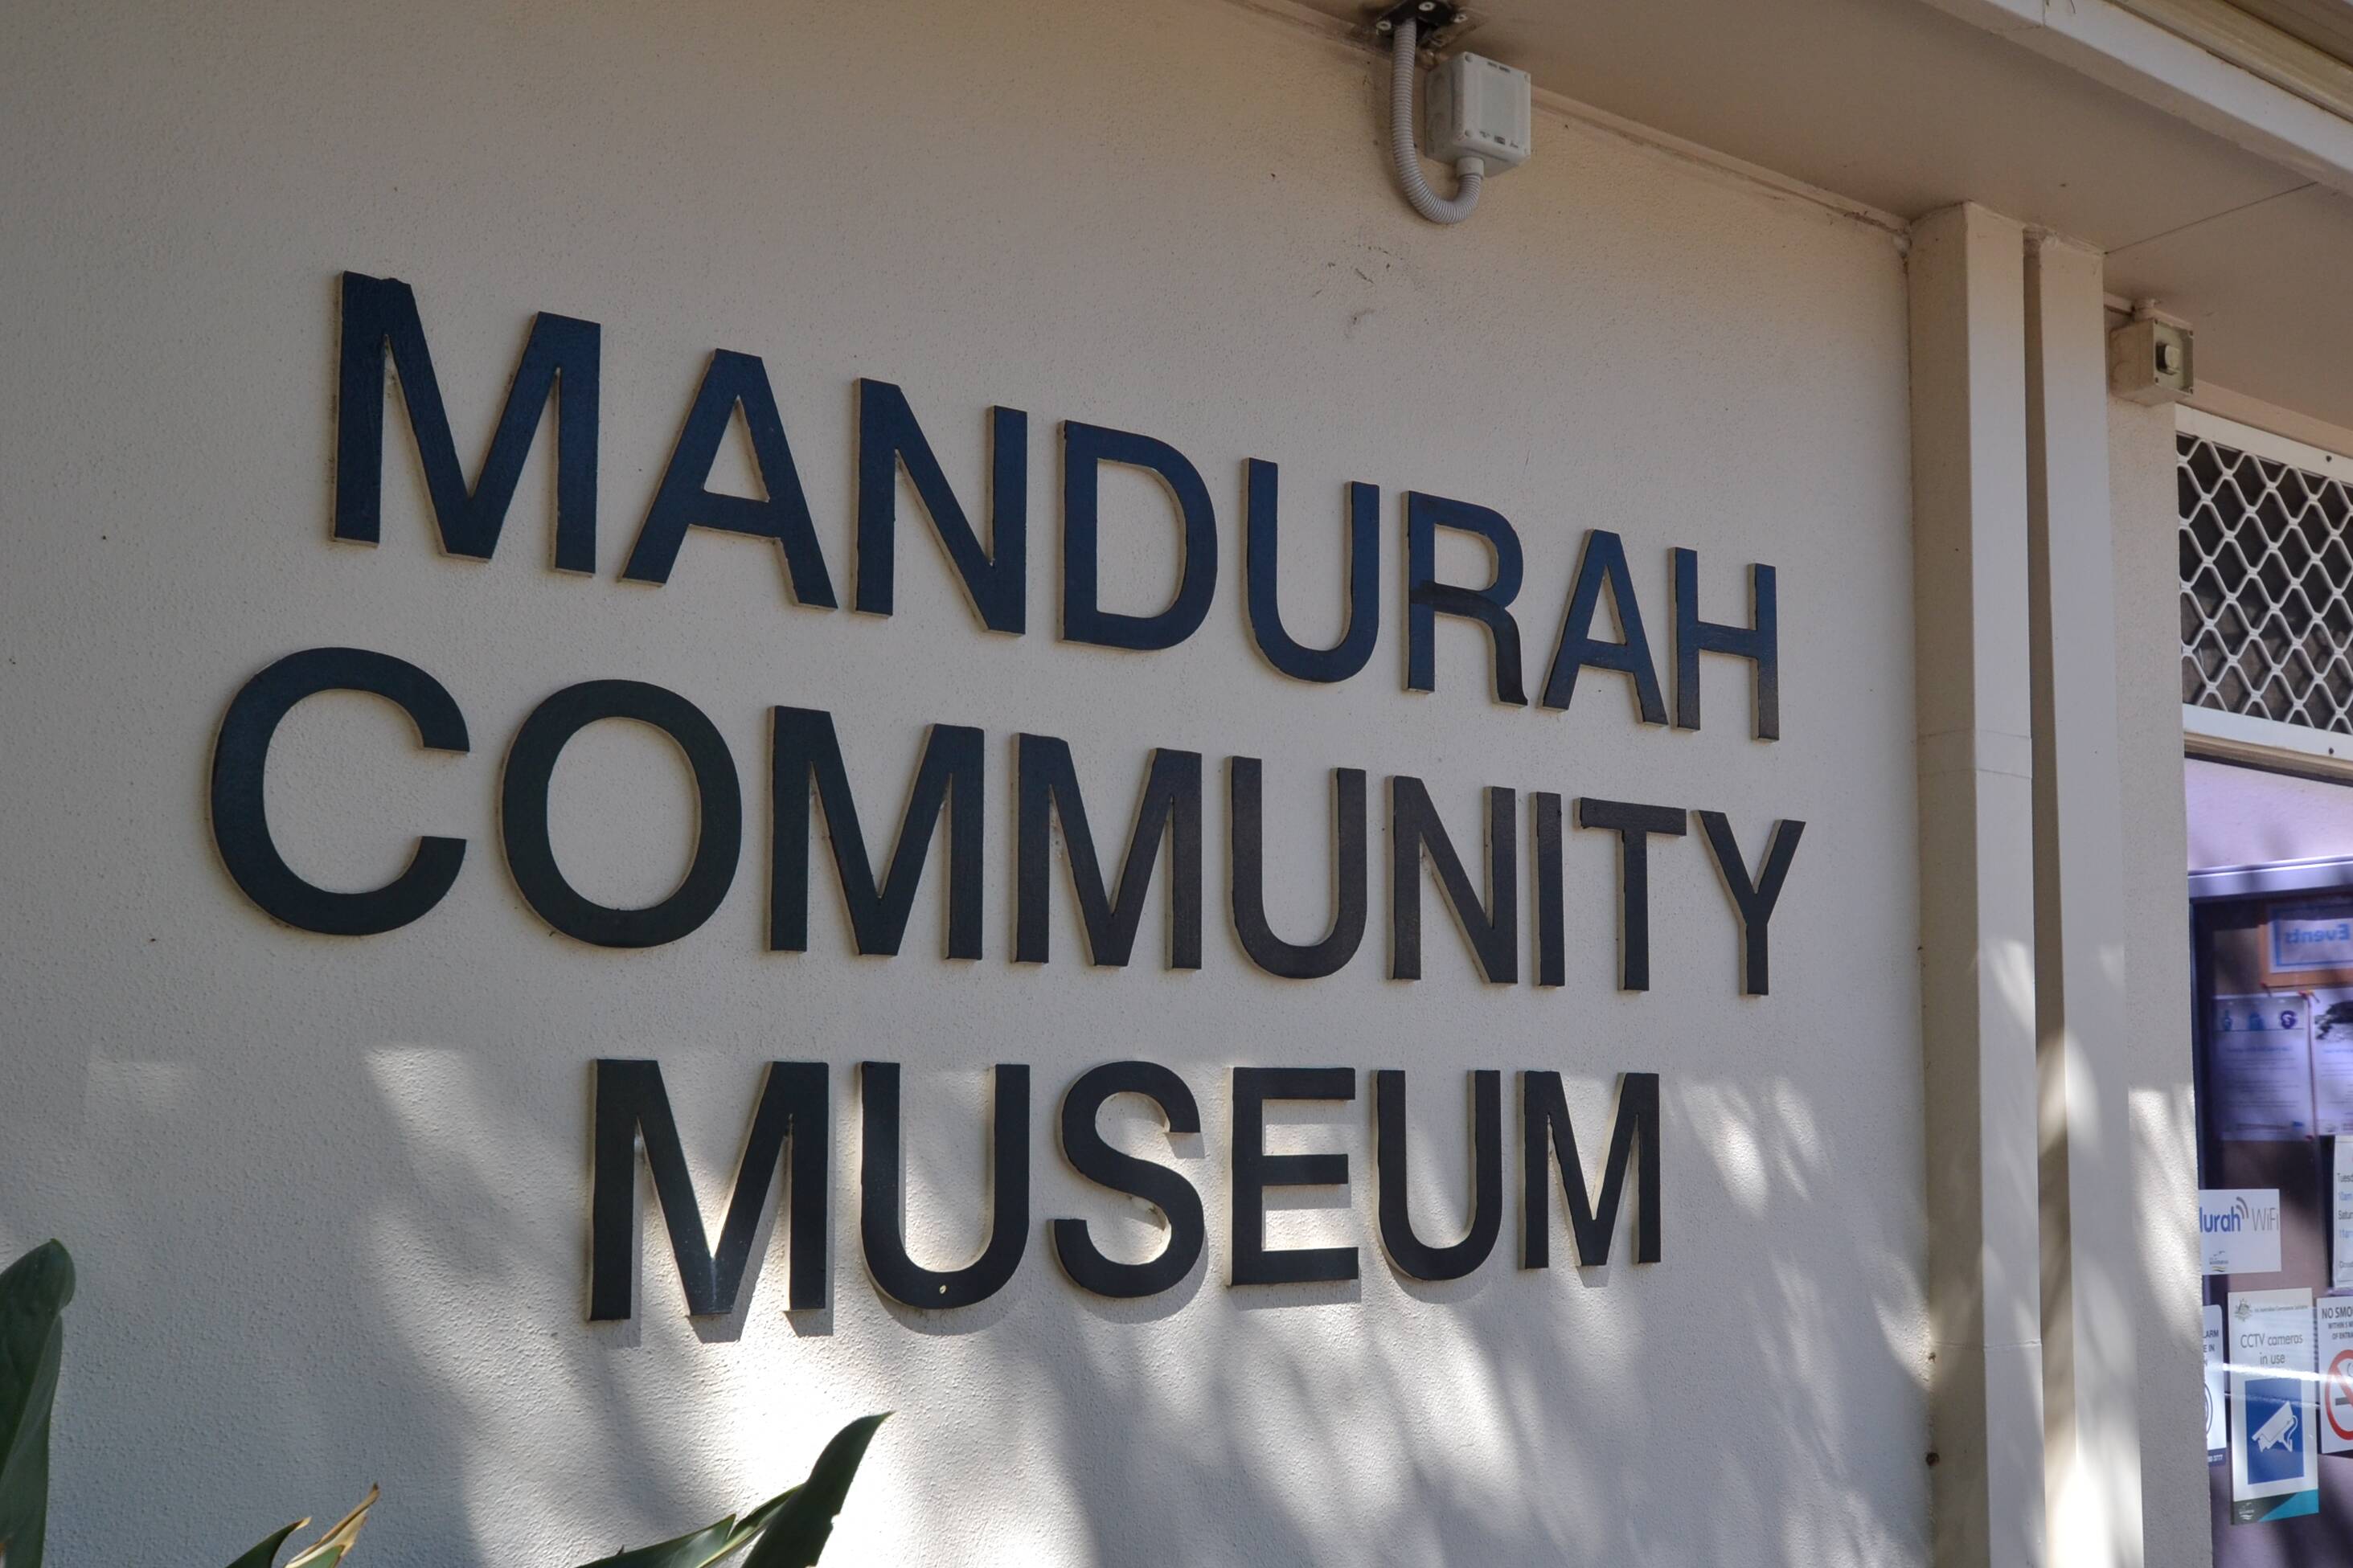 Mandurah Museum Entrance Fee